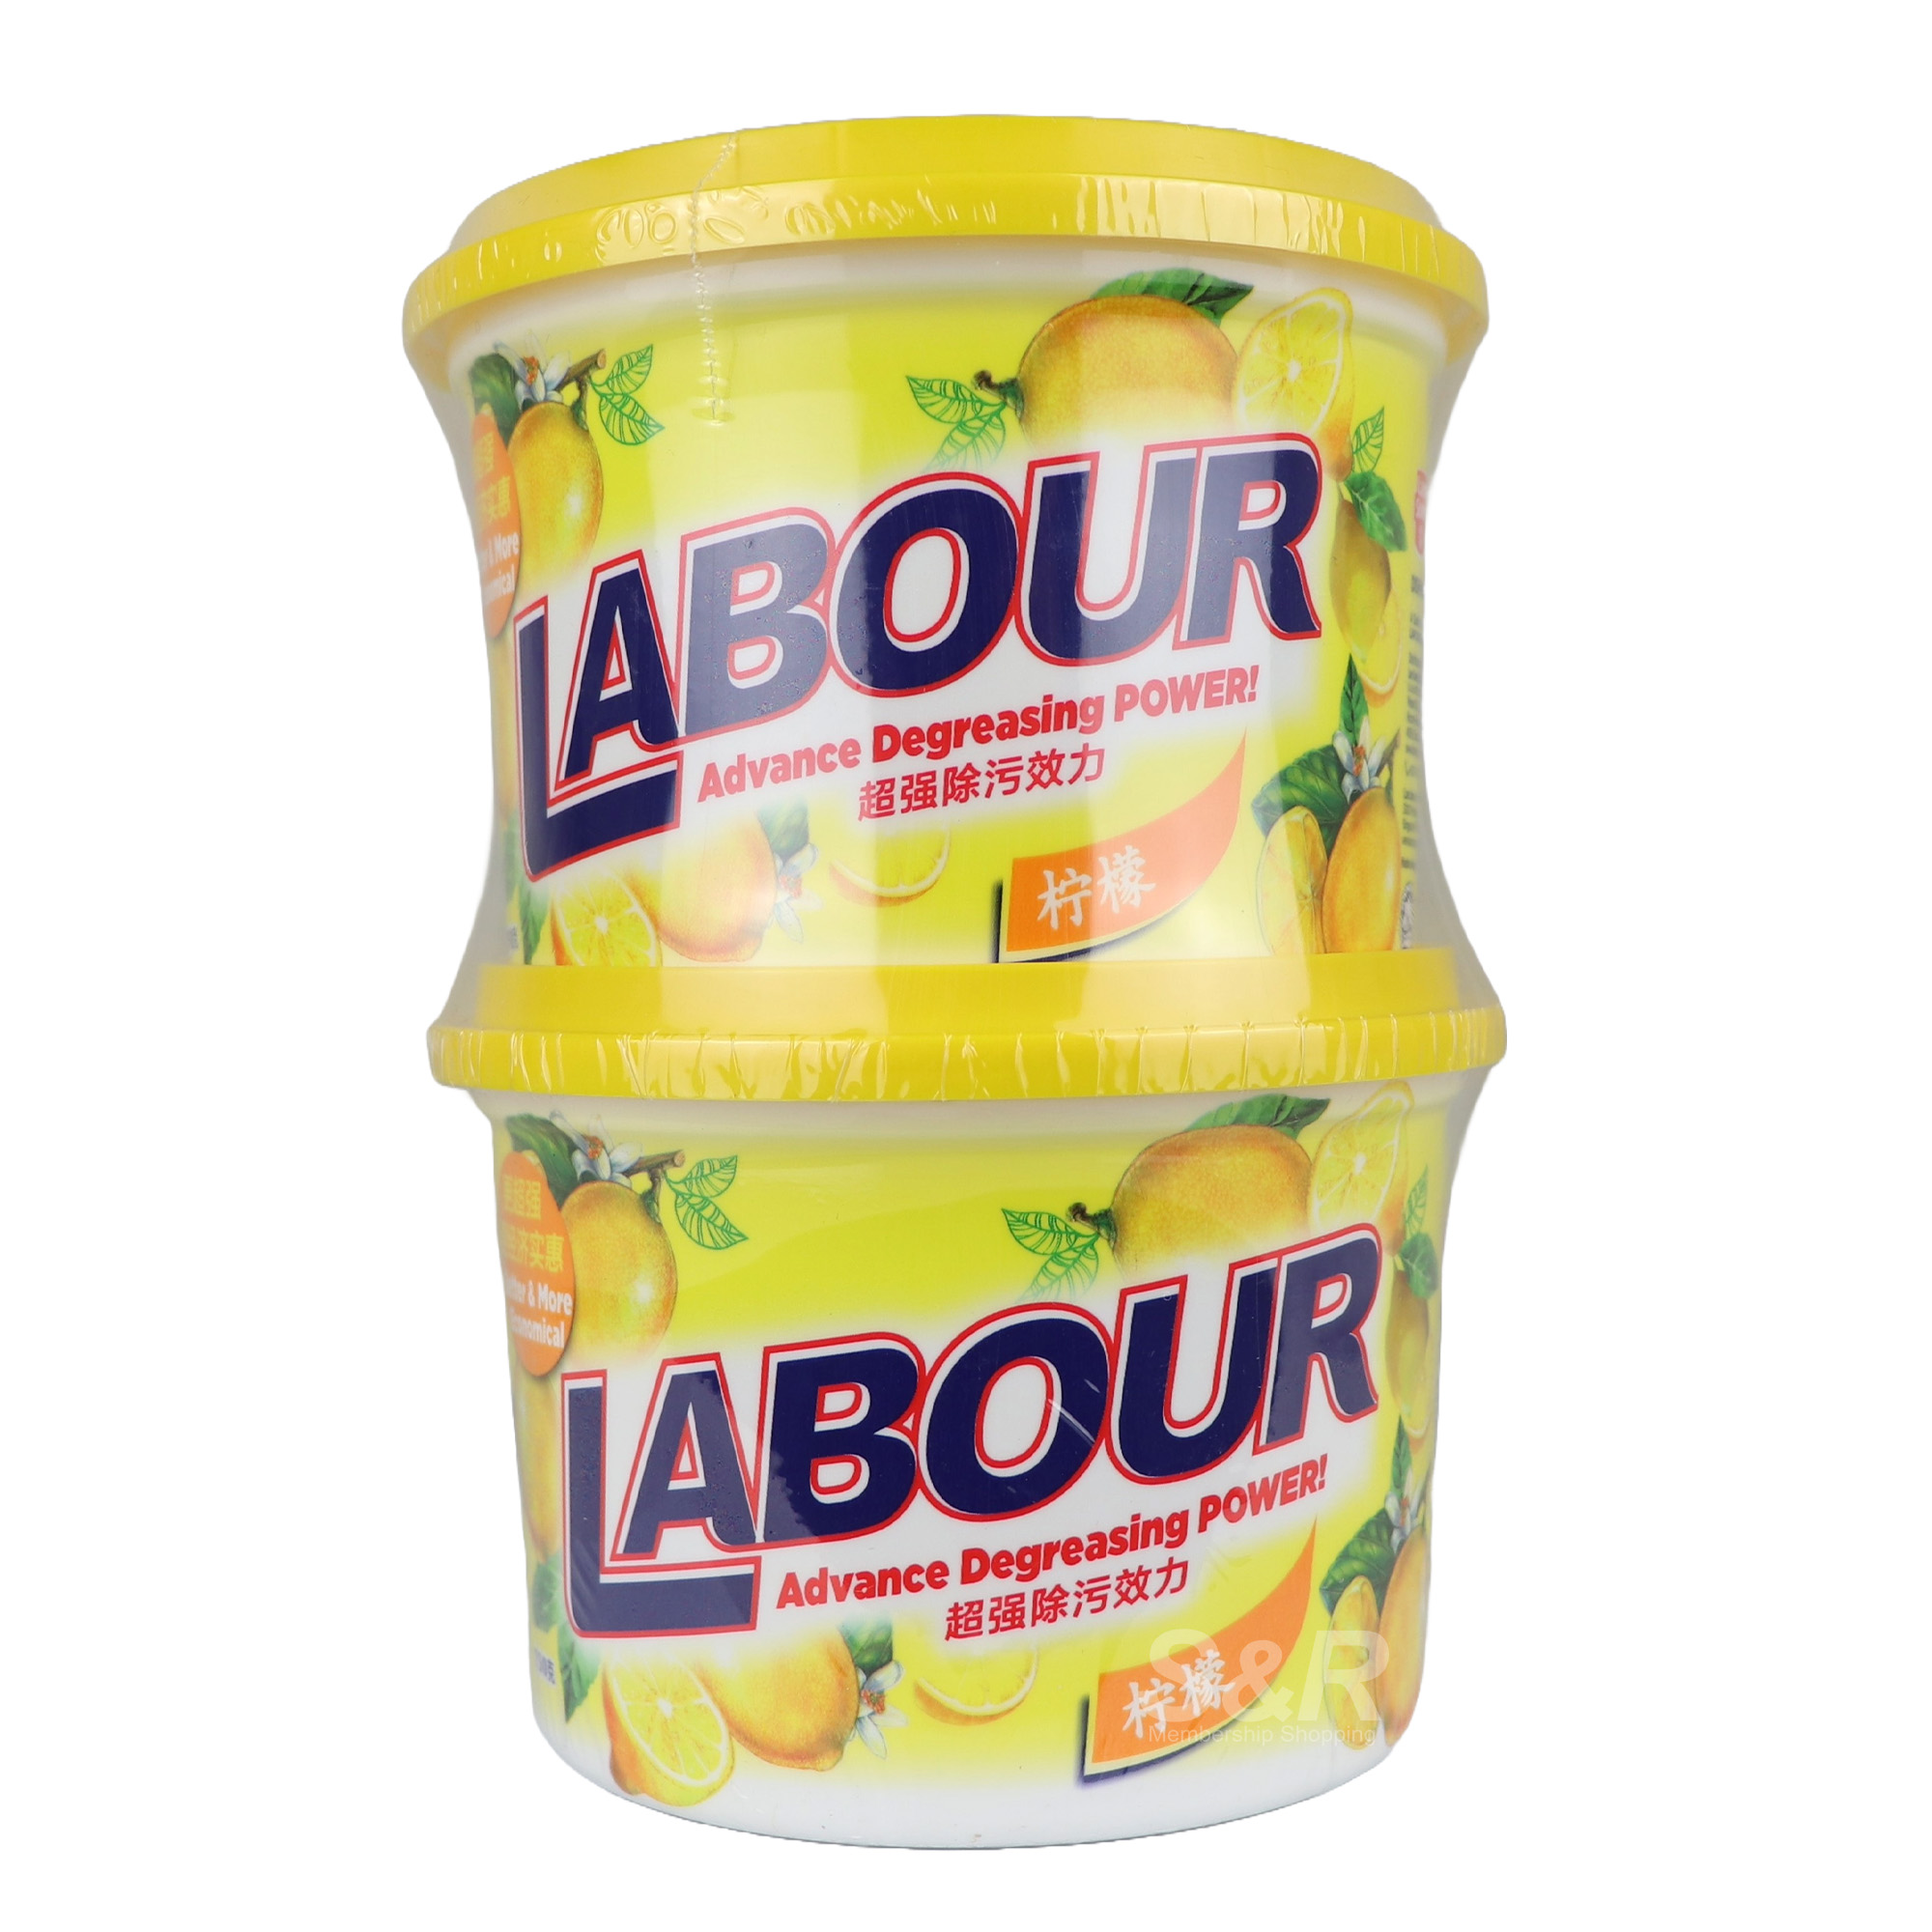 Labour Dishwashing Paste Lemon with Advance Degreasing Power 2x750g